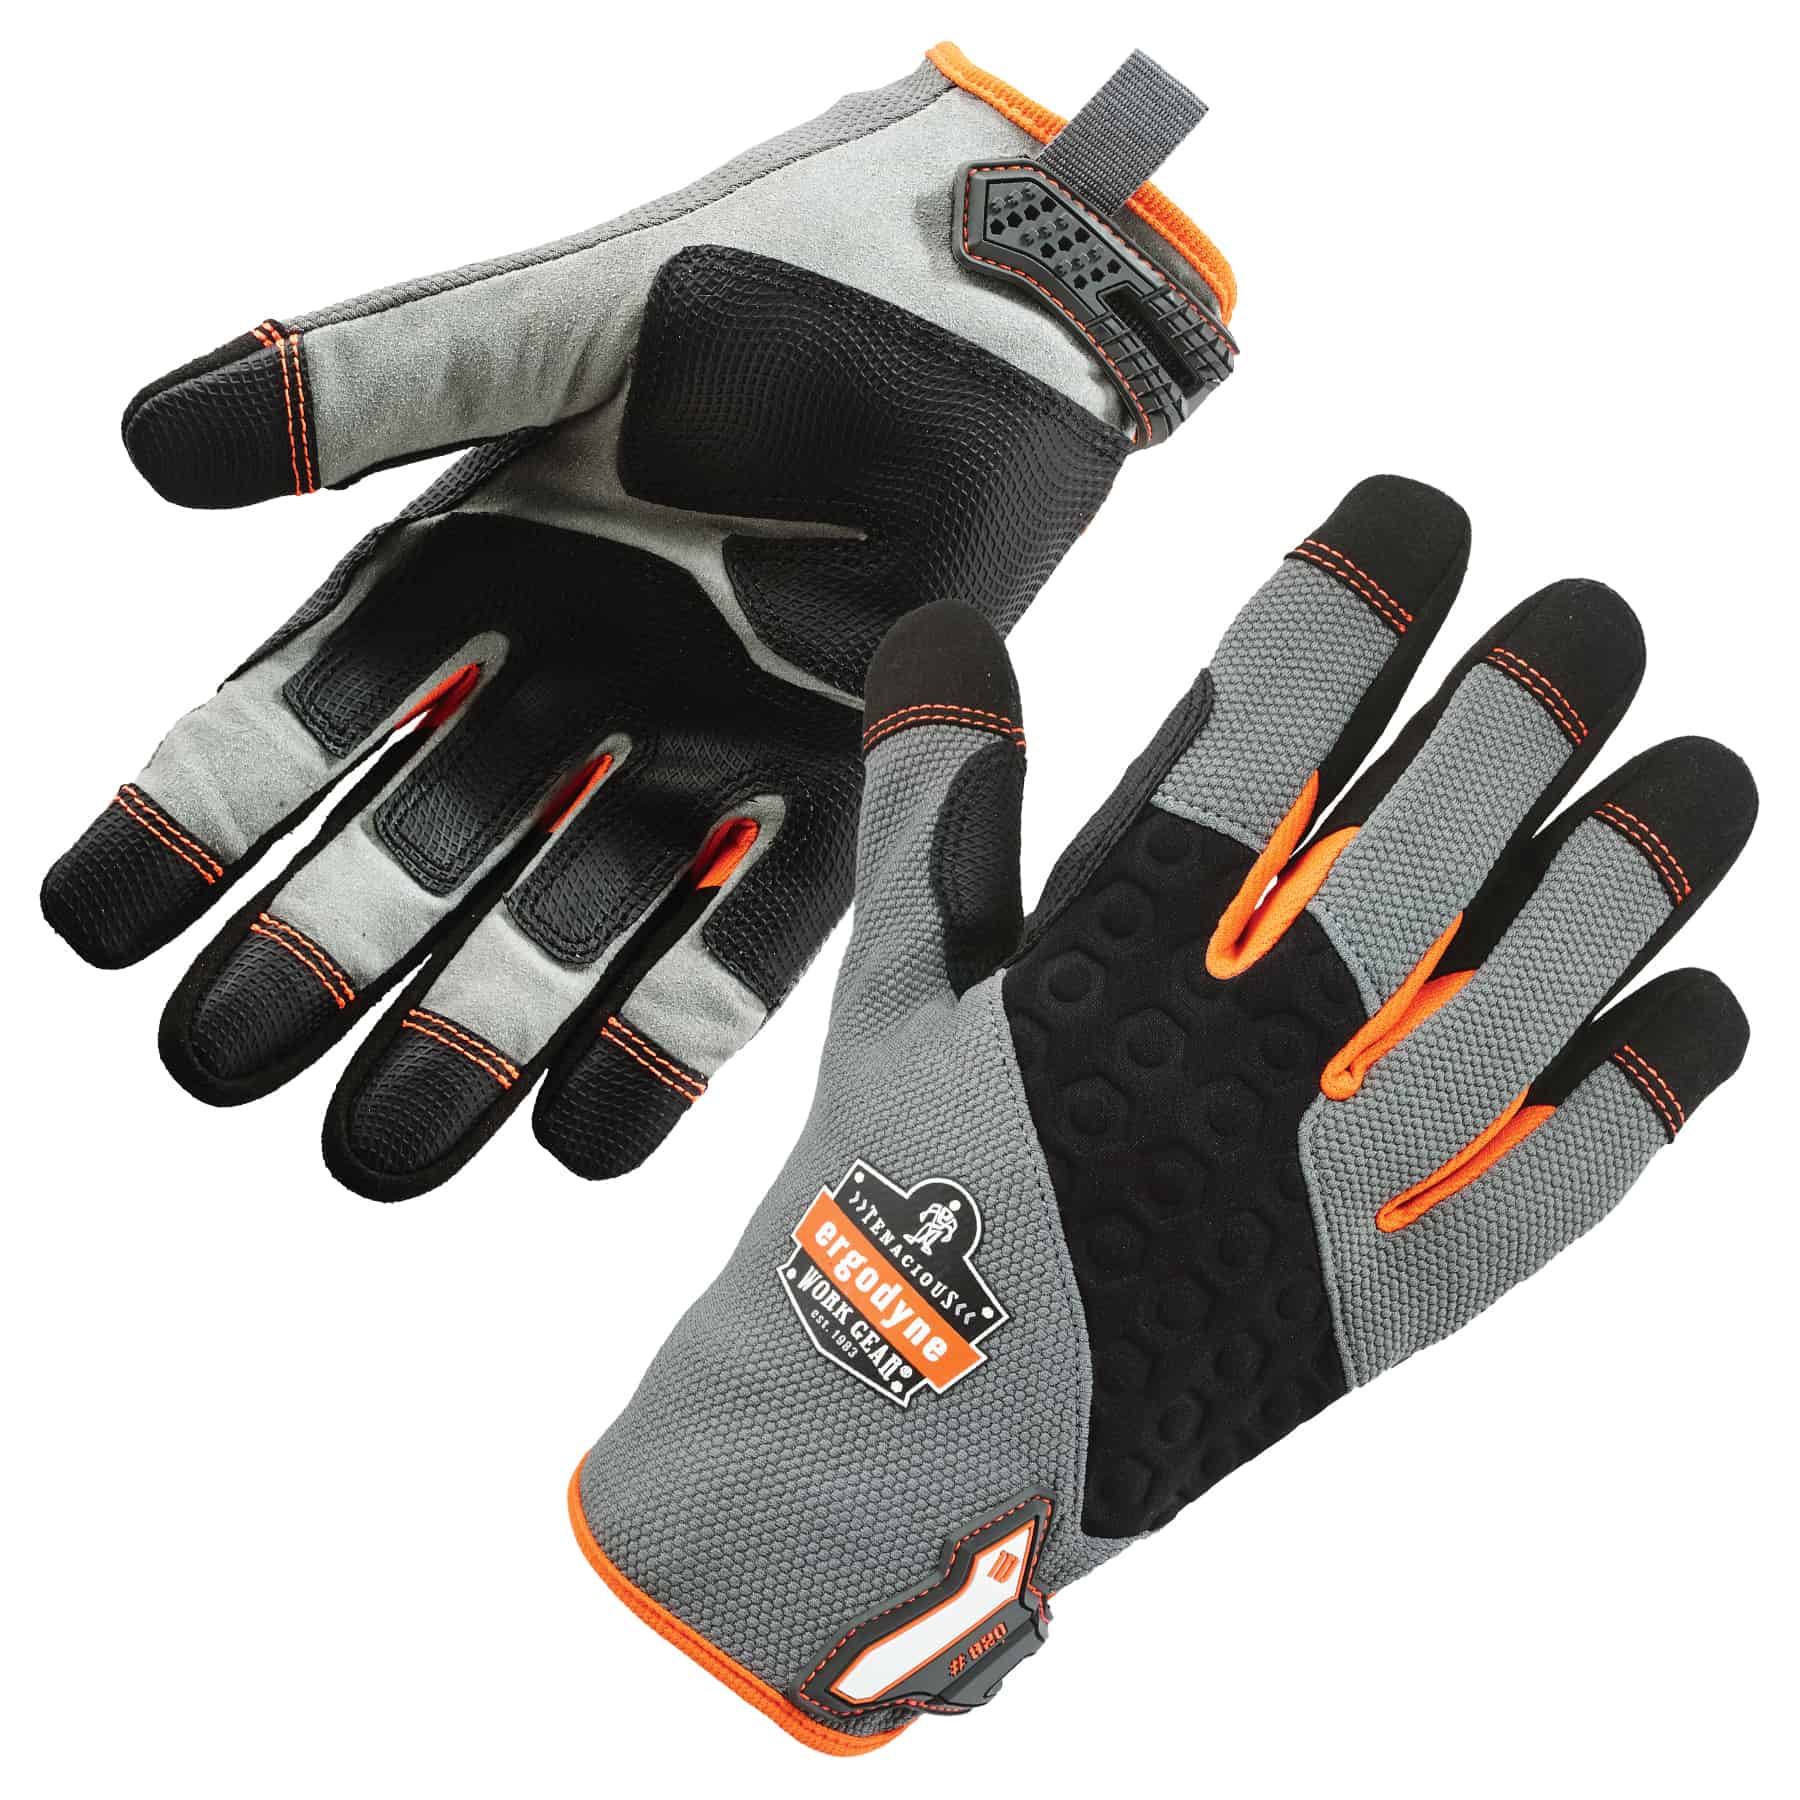 ego17246 ProFlex 820 High Abrasion Handling Gloves ego-17246 